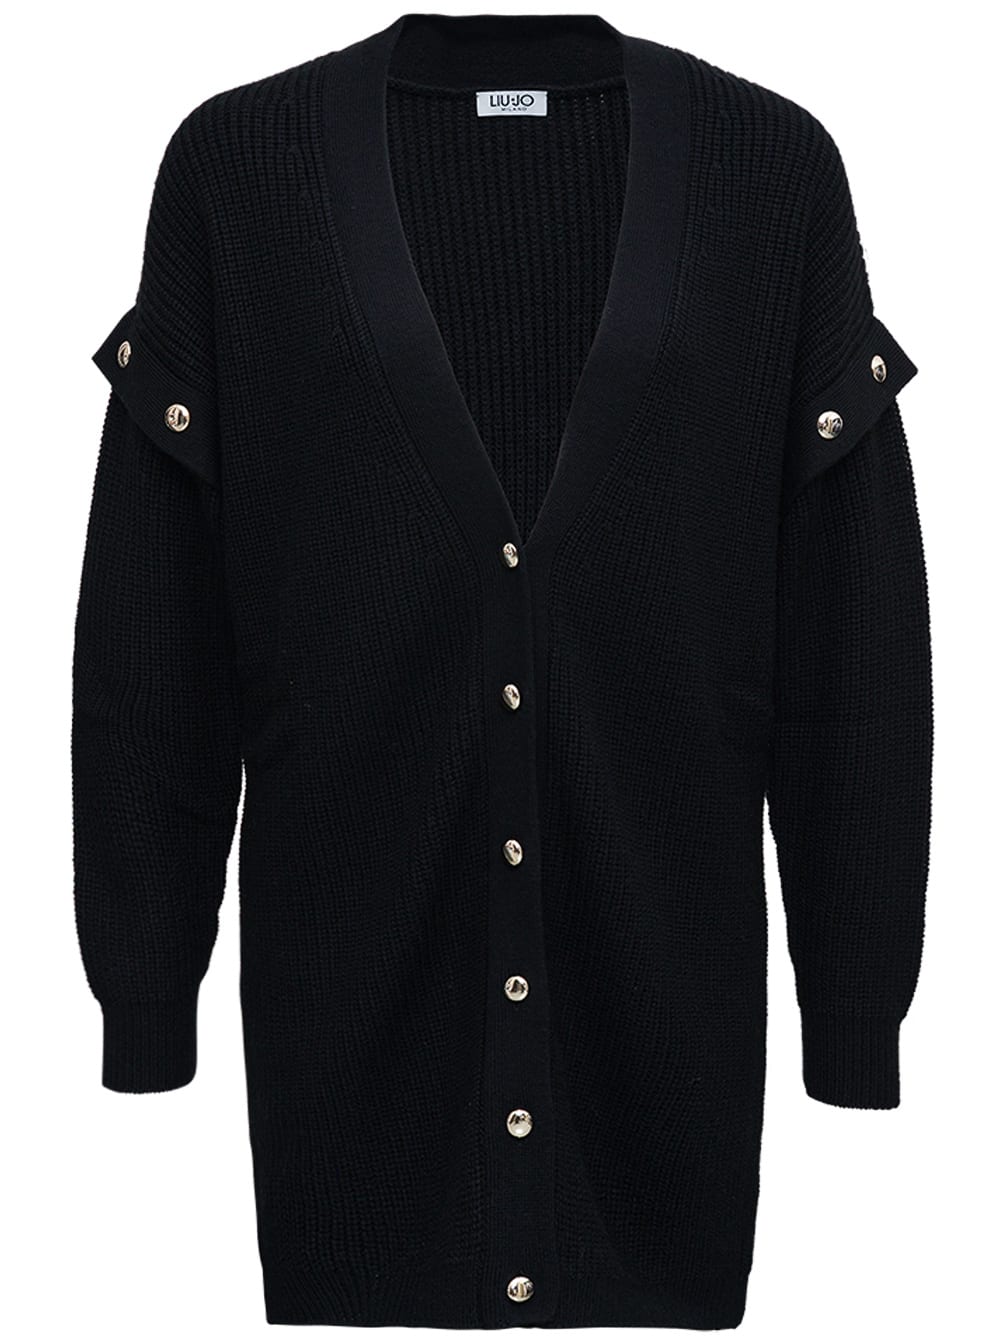 Liu-Jo Long Black Wool Blend Cardigan With Buttons